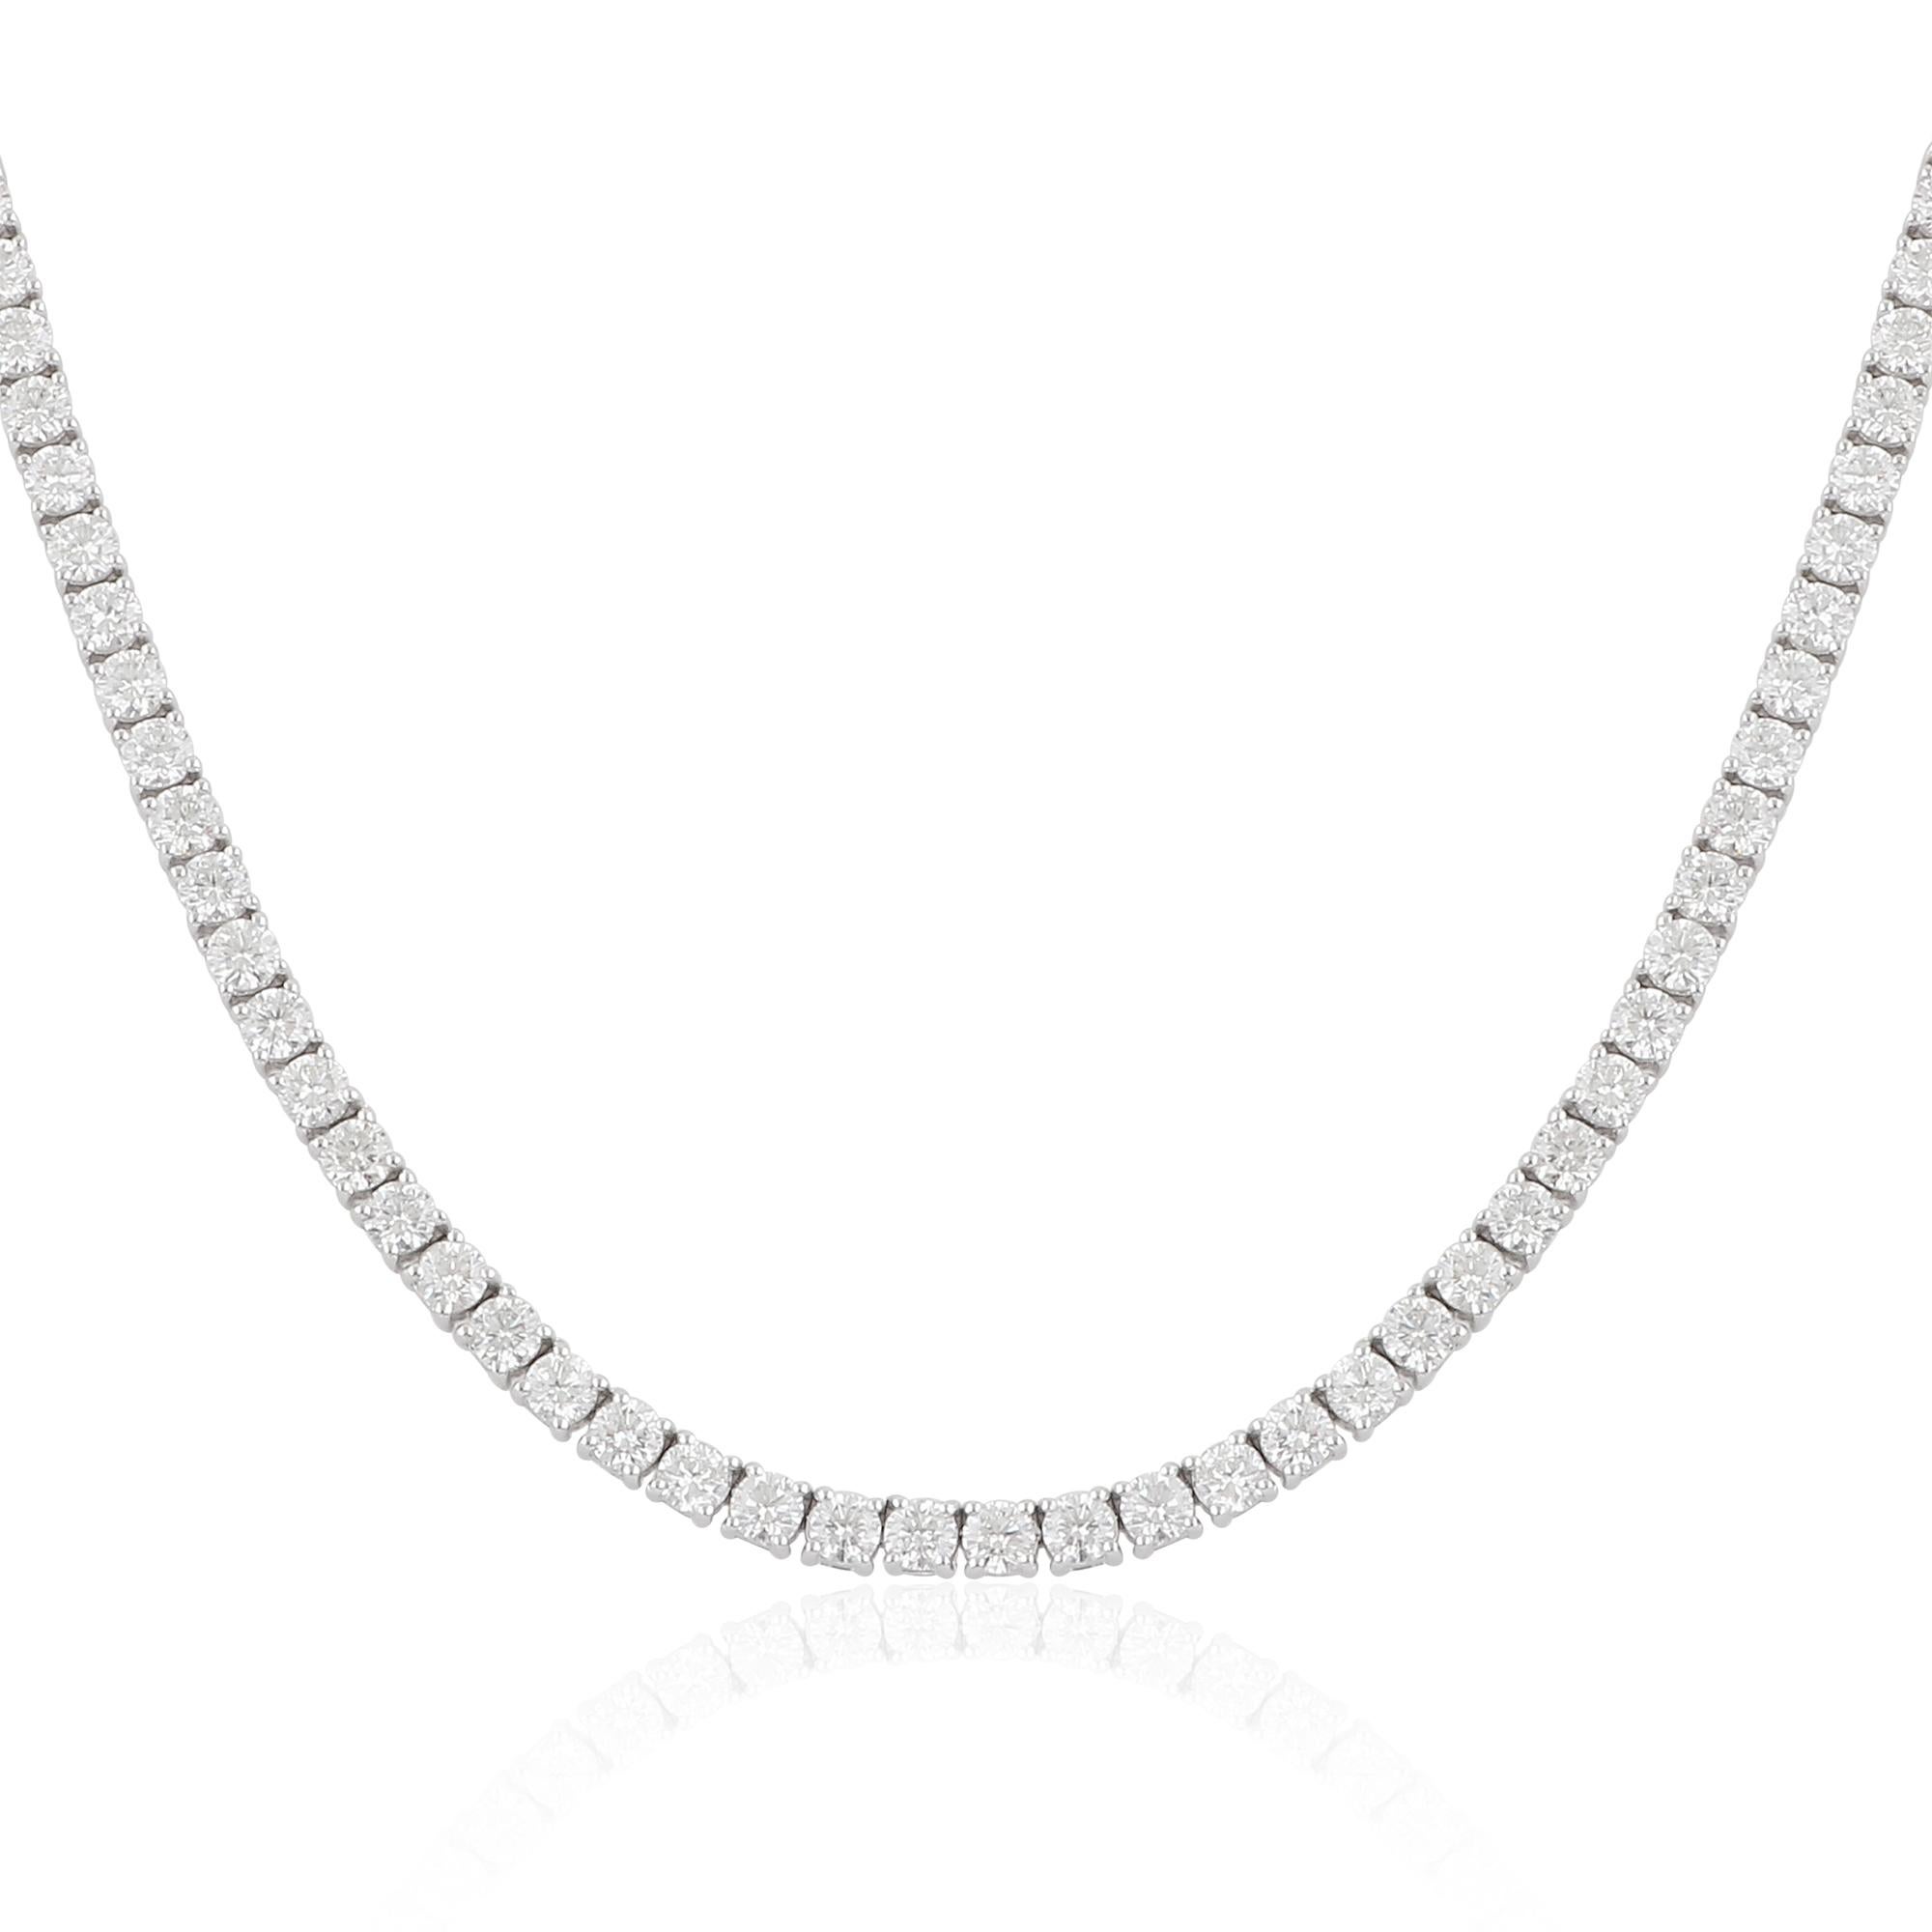 Modern 26.10 Carat Diamond Tennis Chain Necklace 18 Karat White Gold Handmade Jewelry For Sale